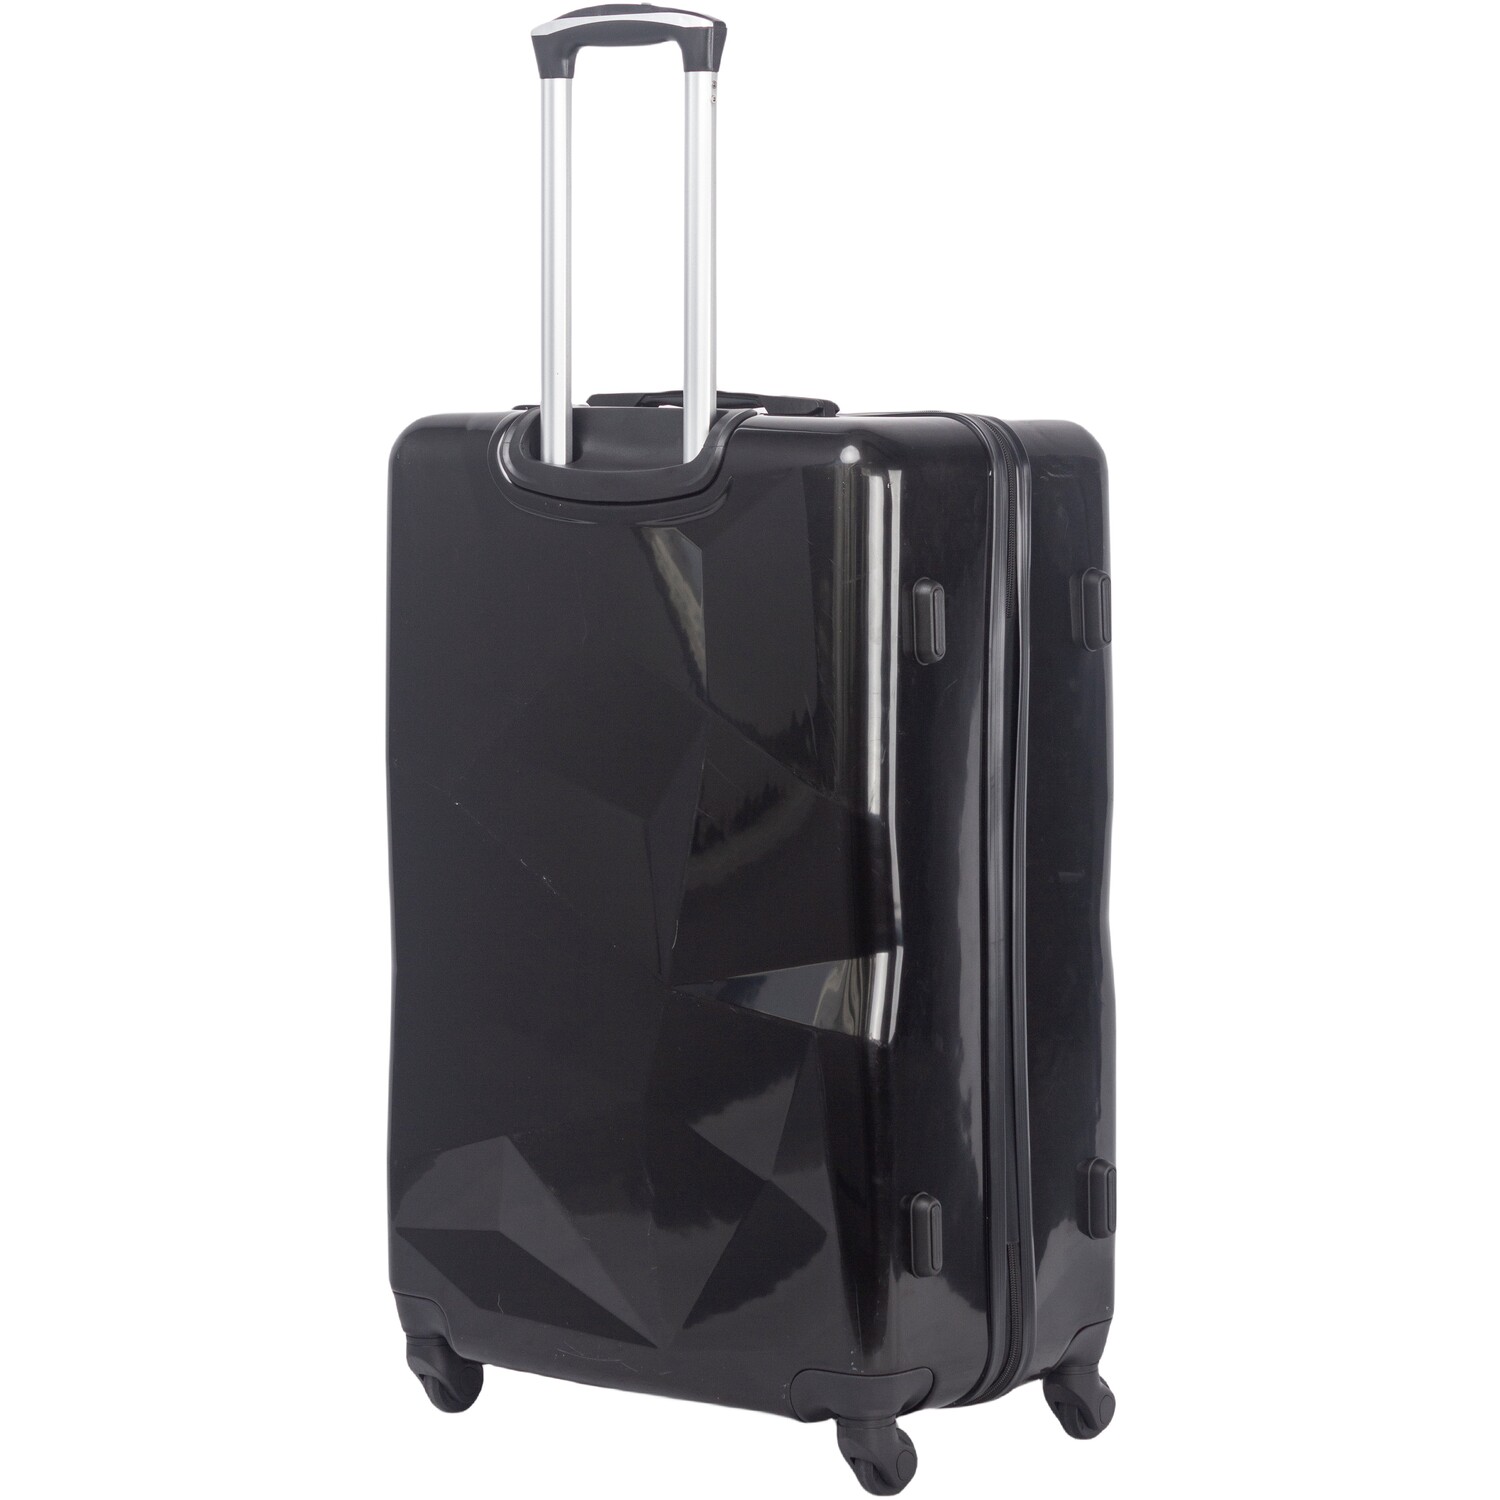 Swift Comet Suitcase - Black / Cabin Case Image 4